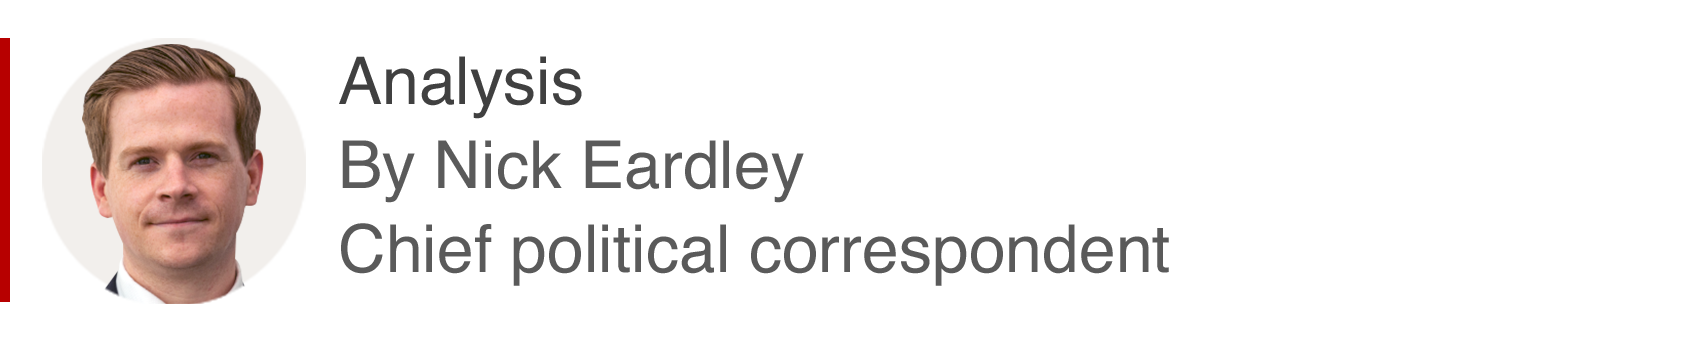 Analysis box by Nick Eardley, political correspondent